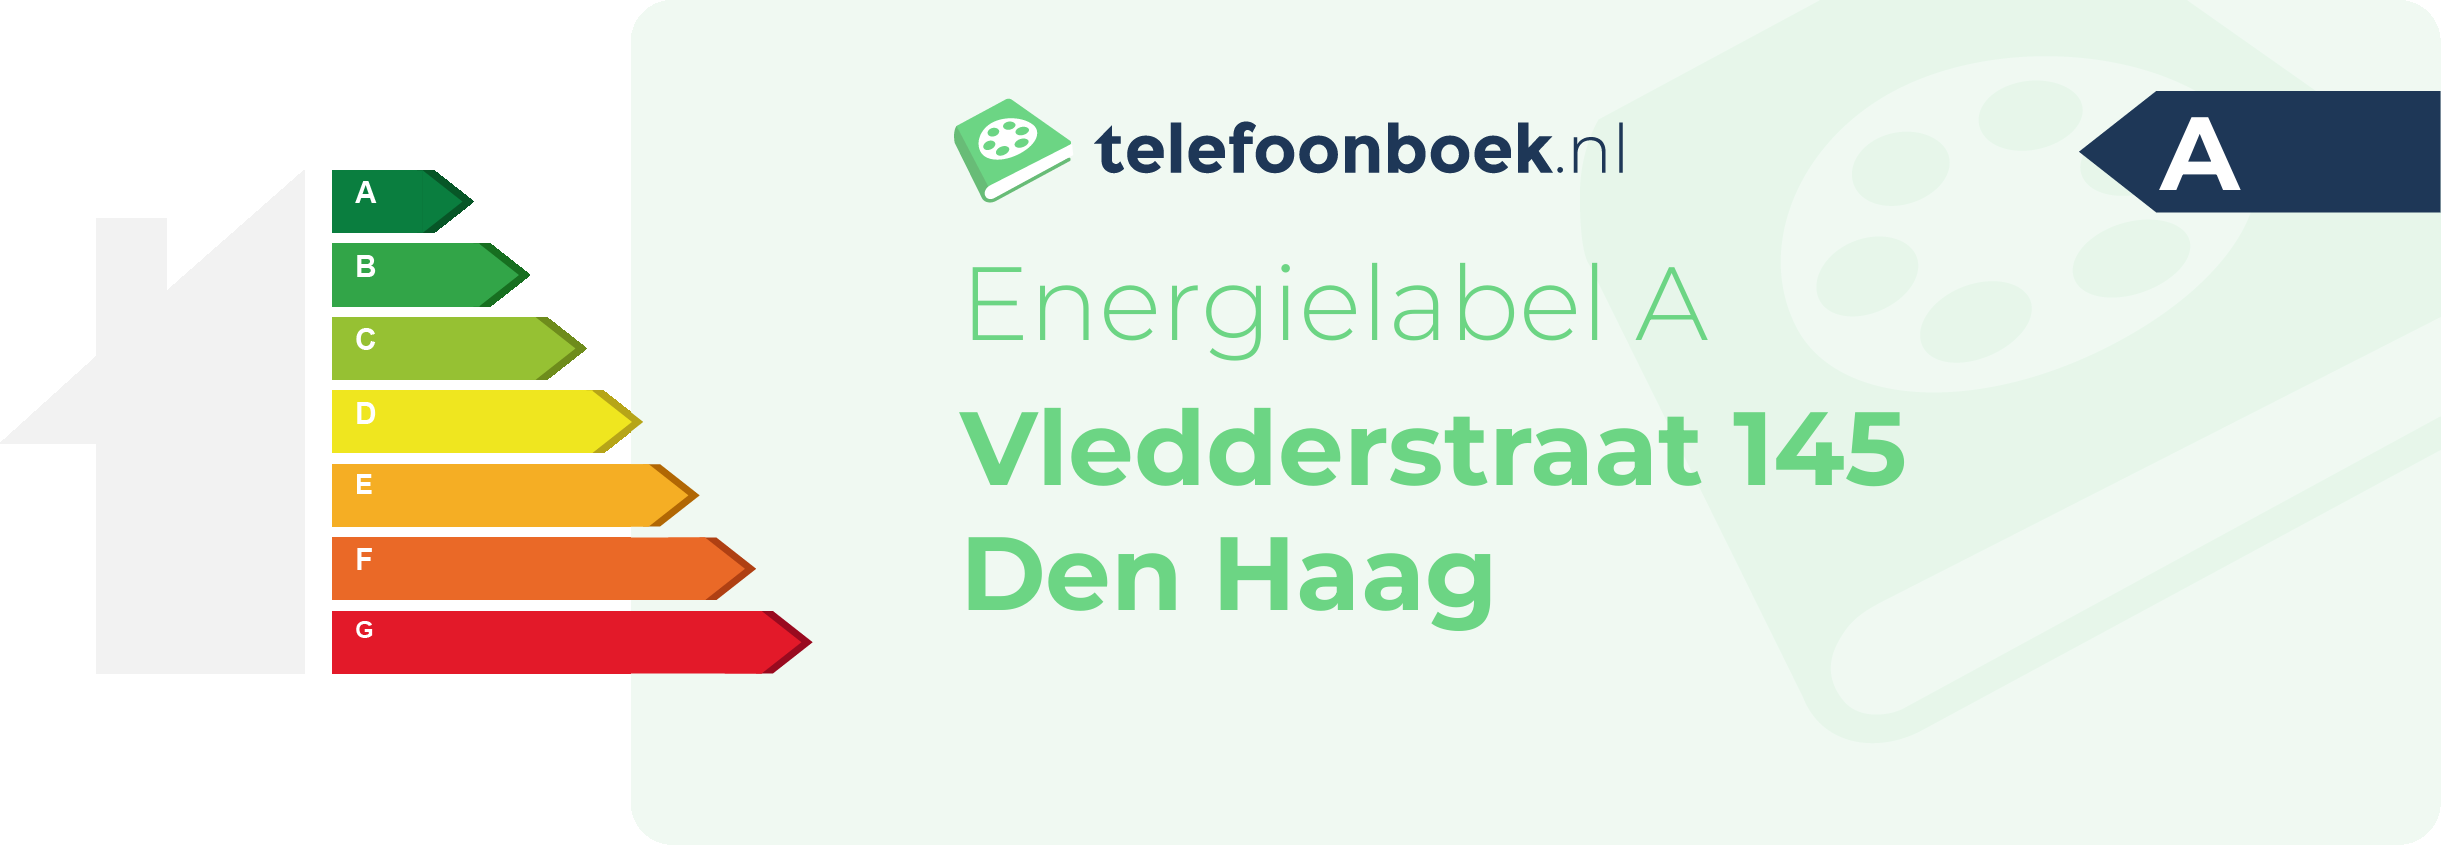 Energielabel Vledderstraat 145 Den Haag